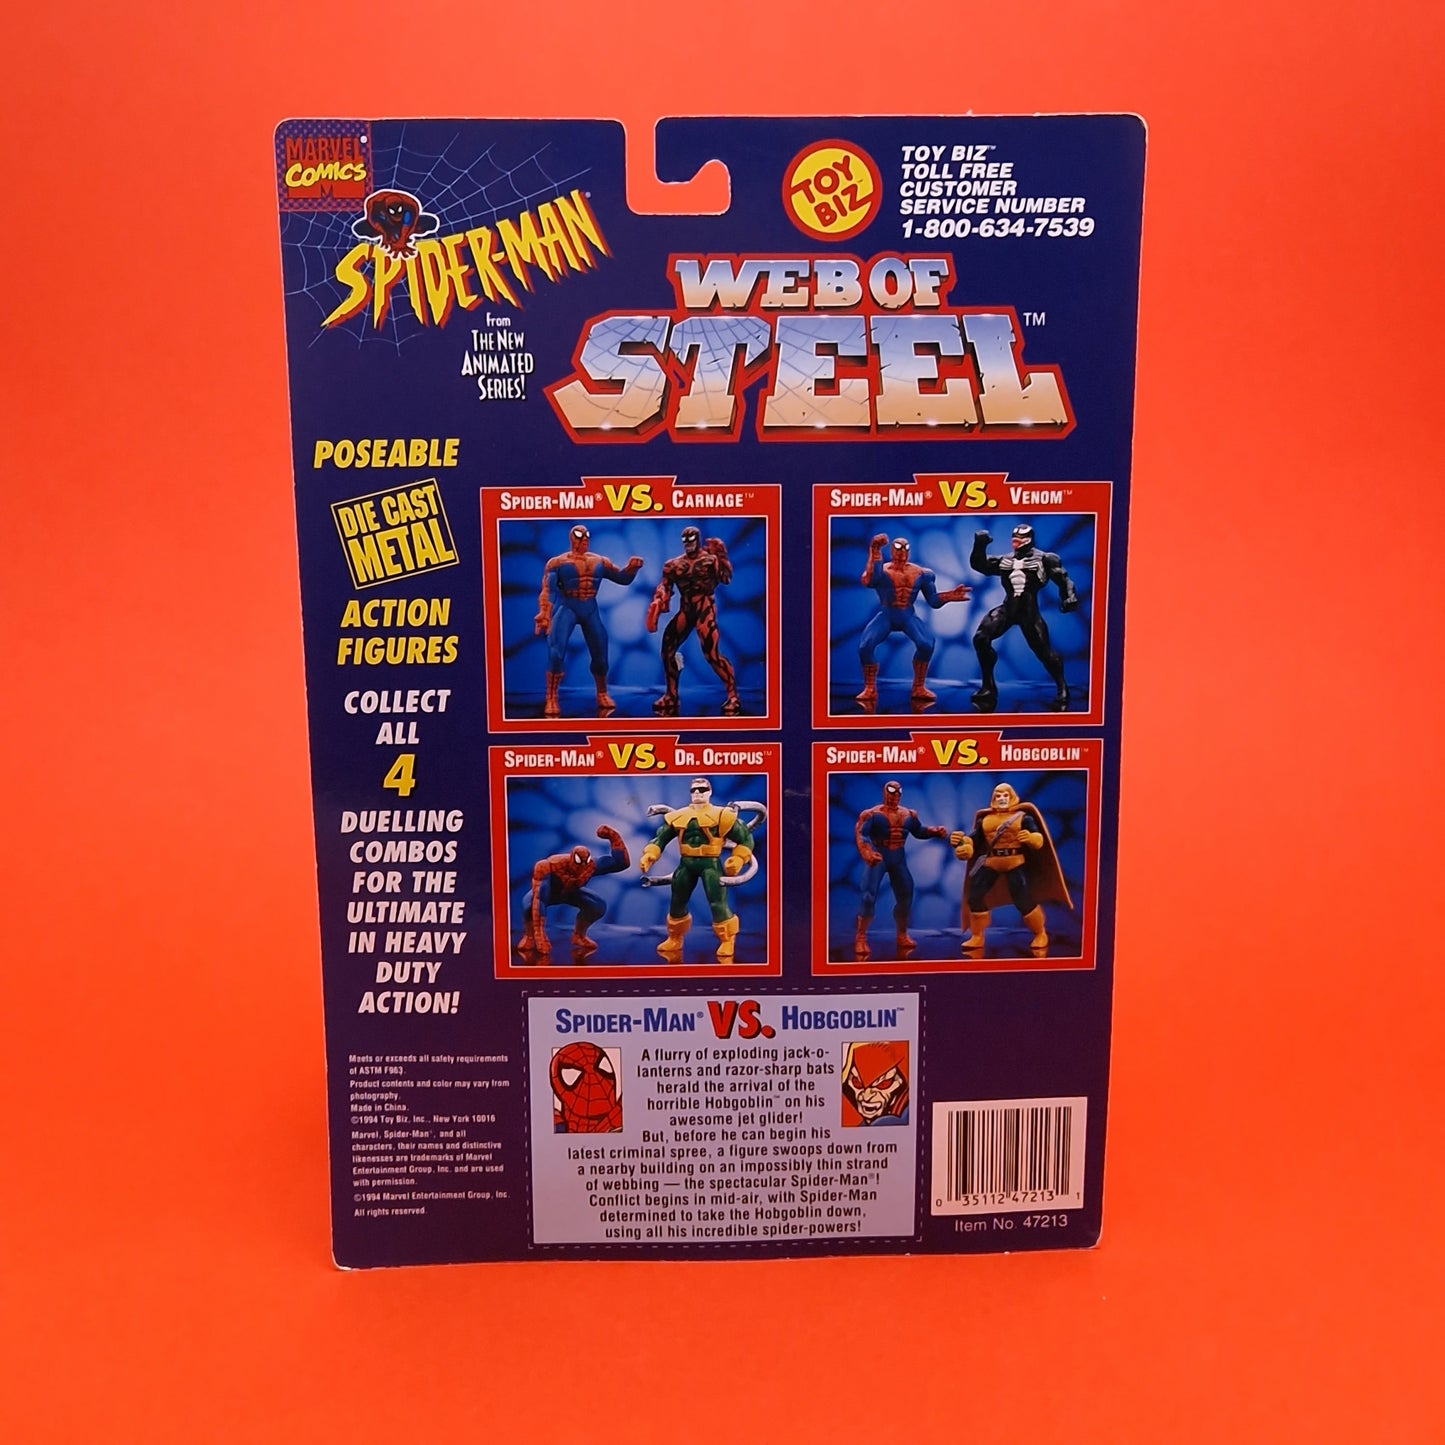 SPIDER-MAN WEB OF STEEL ☆ Spider-Man Vs Hobgoblin MARVEL Figure ☆ Diecast Metal Vintage Carded Toybiz 90s